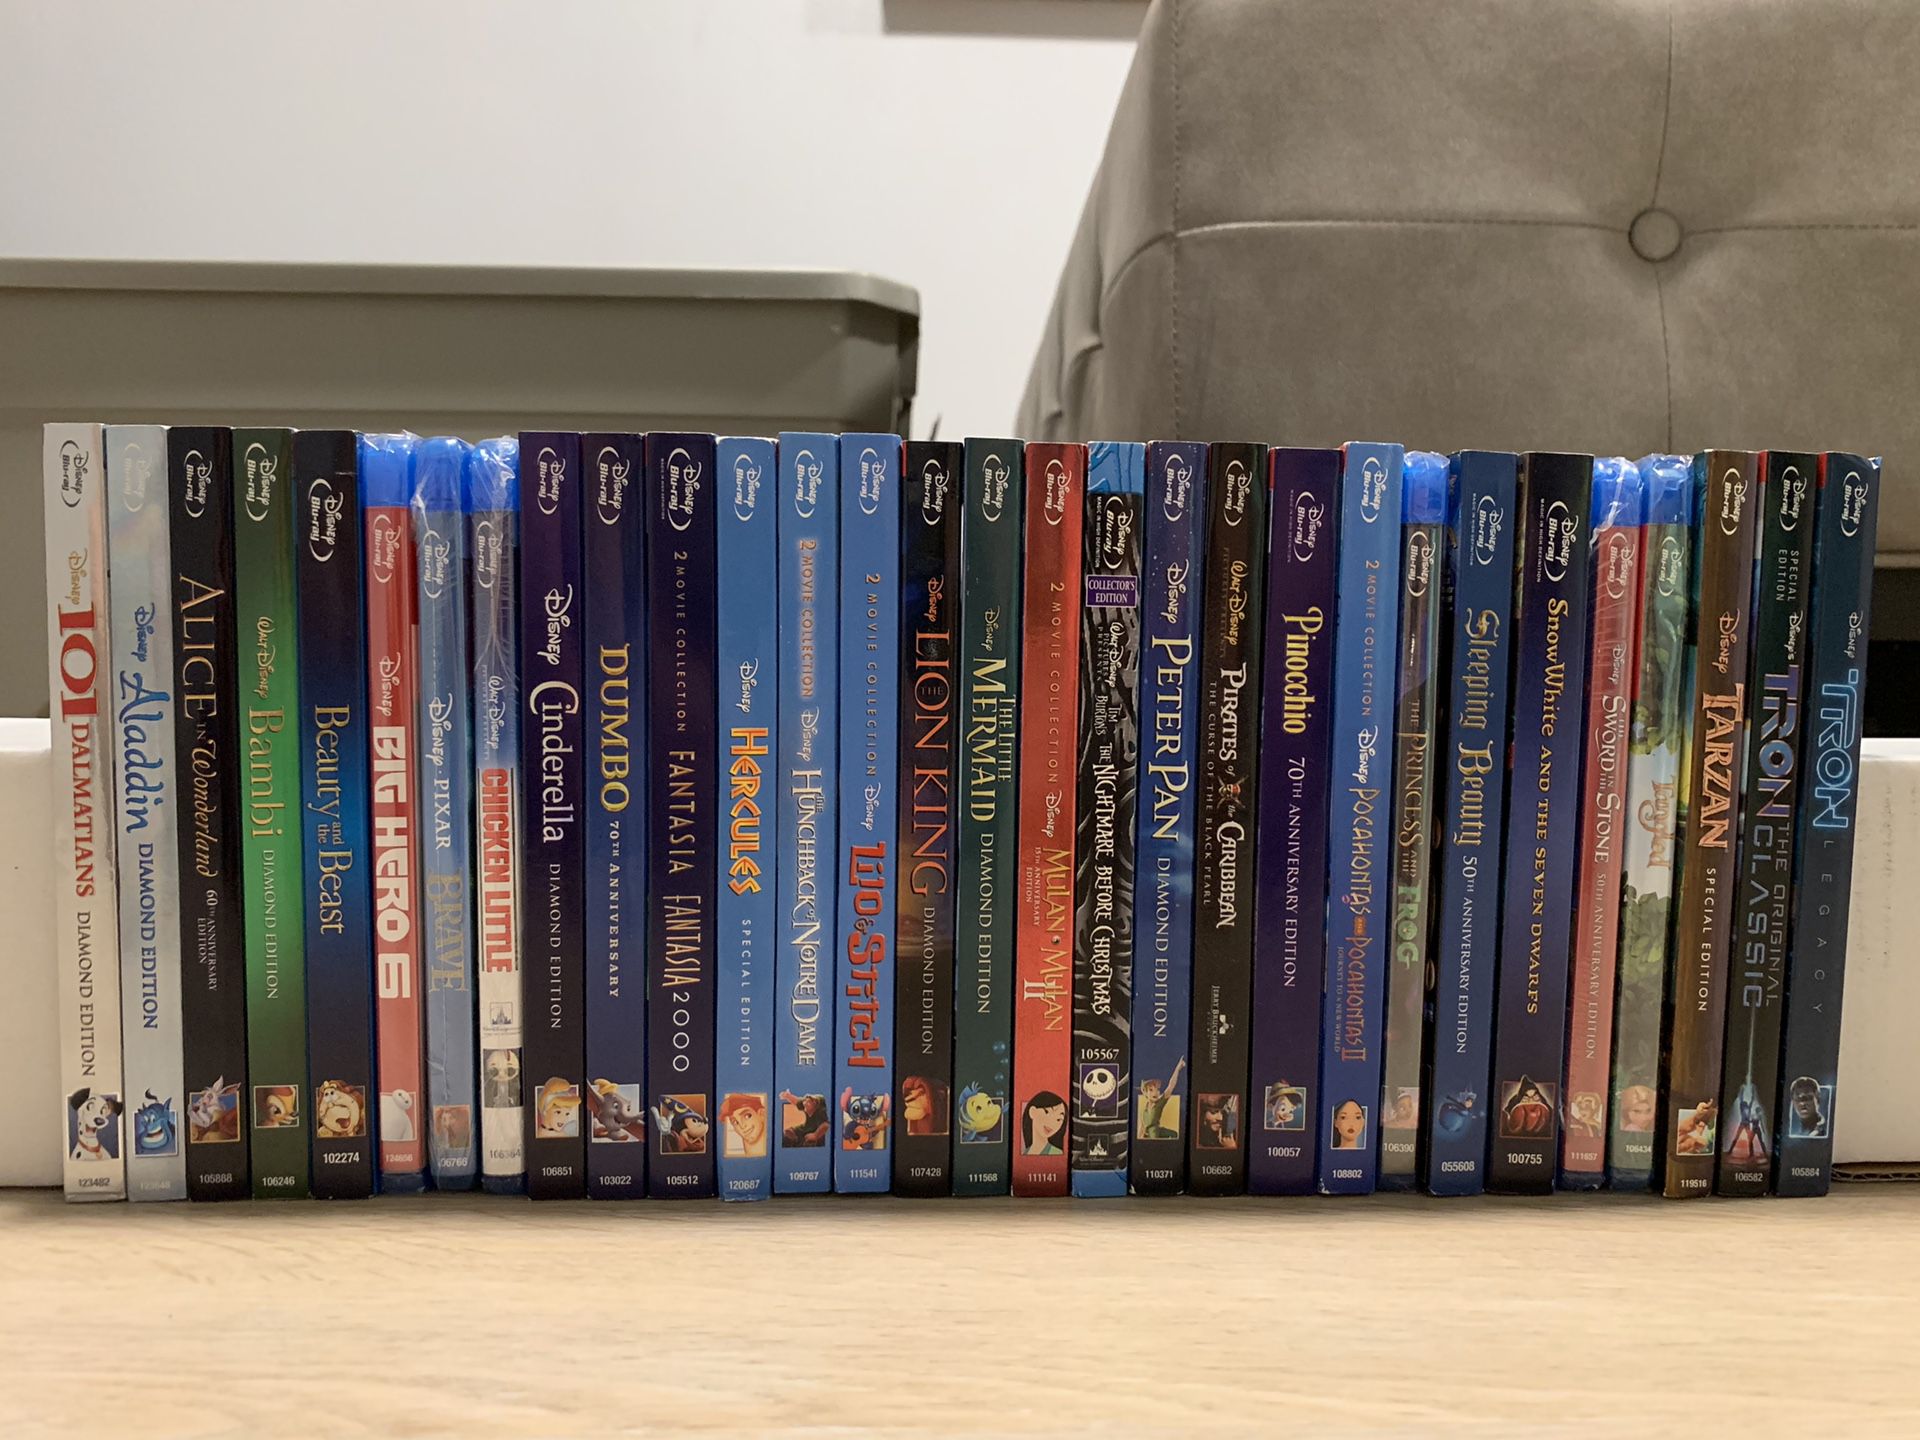 Disney Blu-ray movie collection